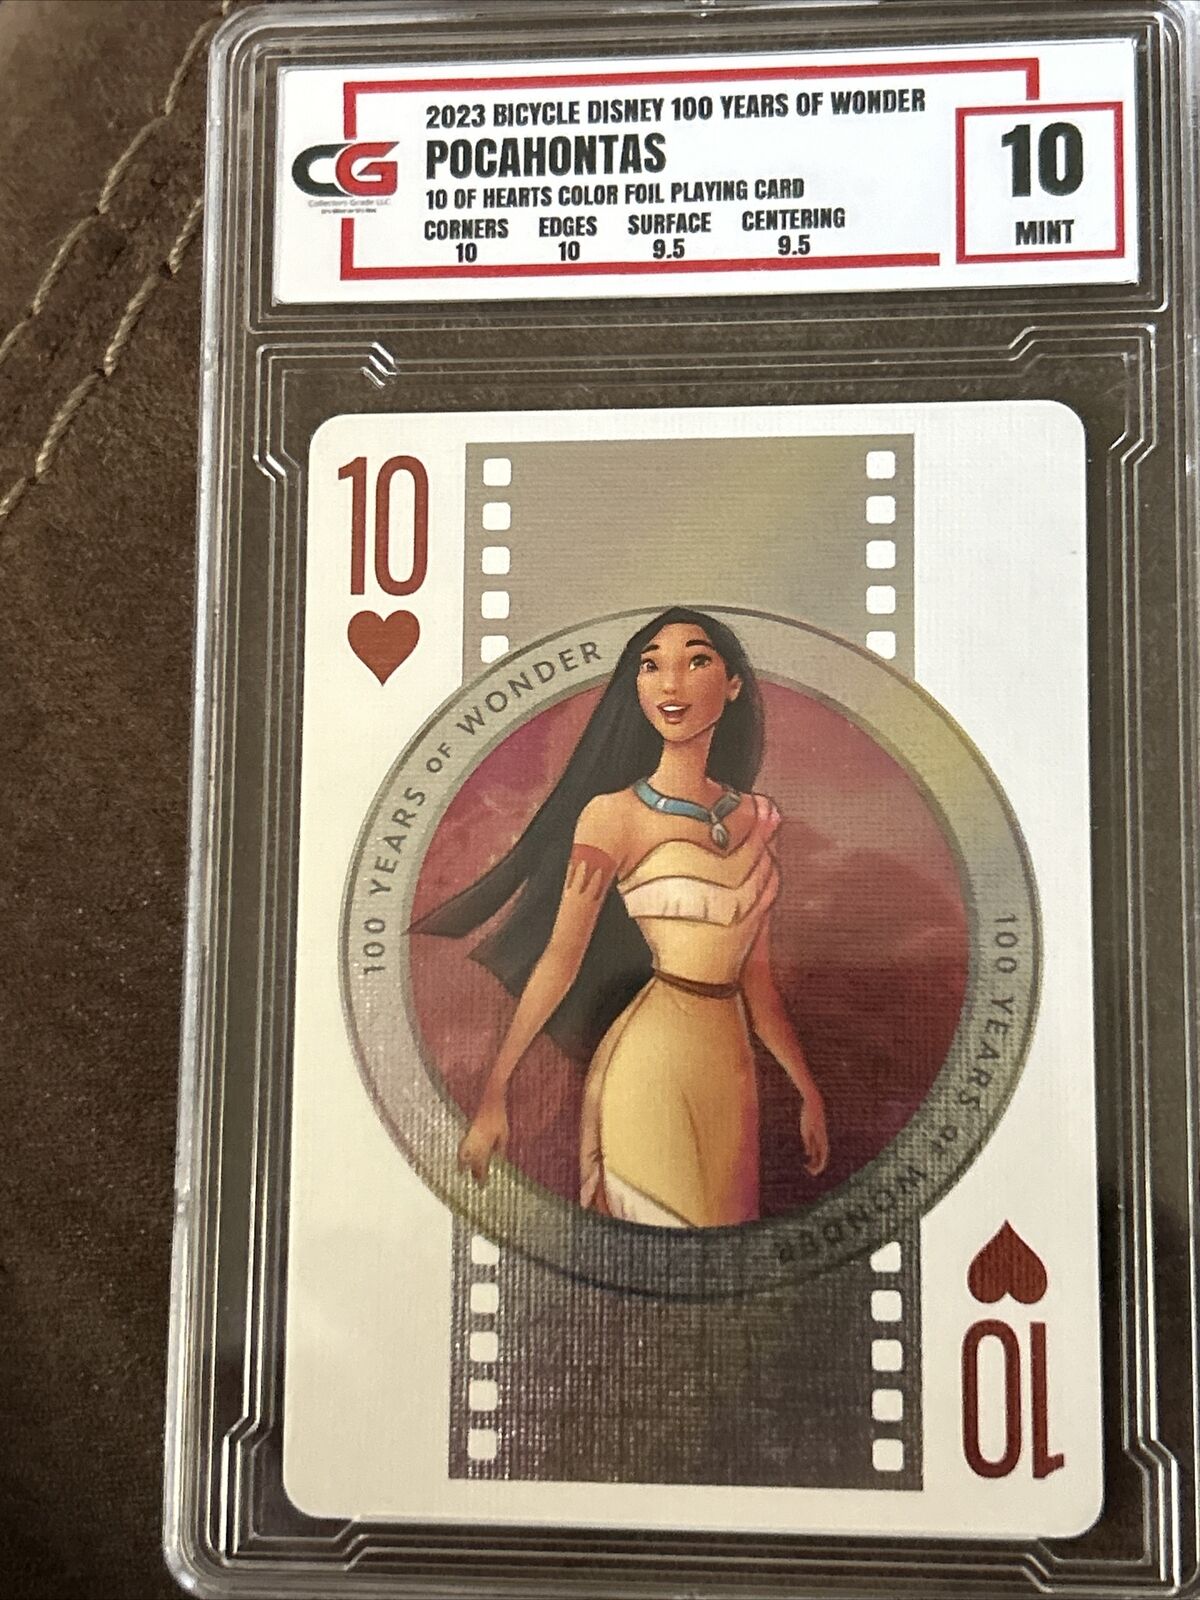 Pocahontas 10 Of Hearts Bicycle Playing Card Disney 100 Years Of Wonder Grade 10